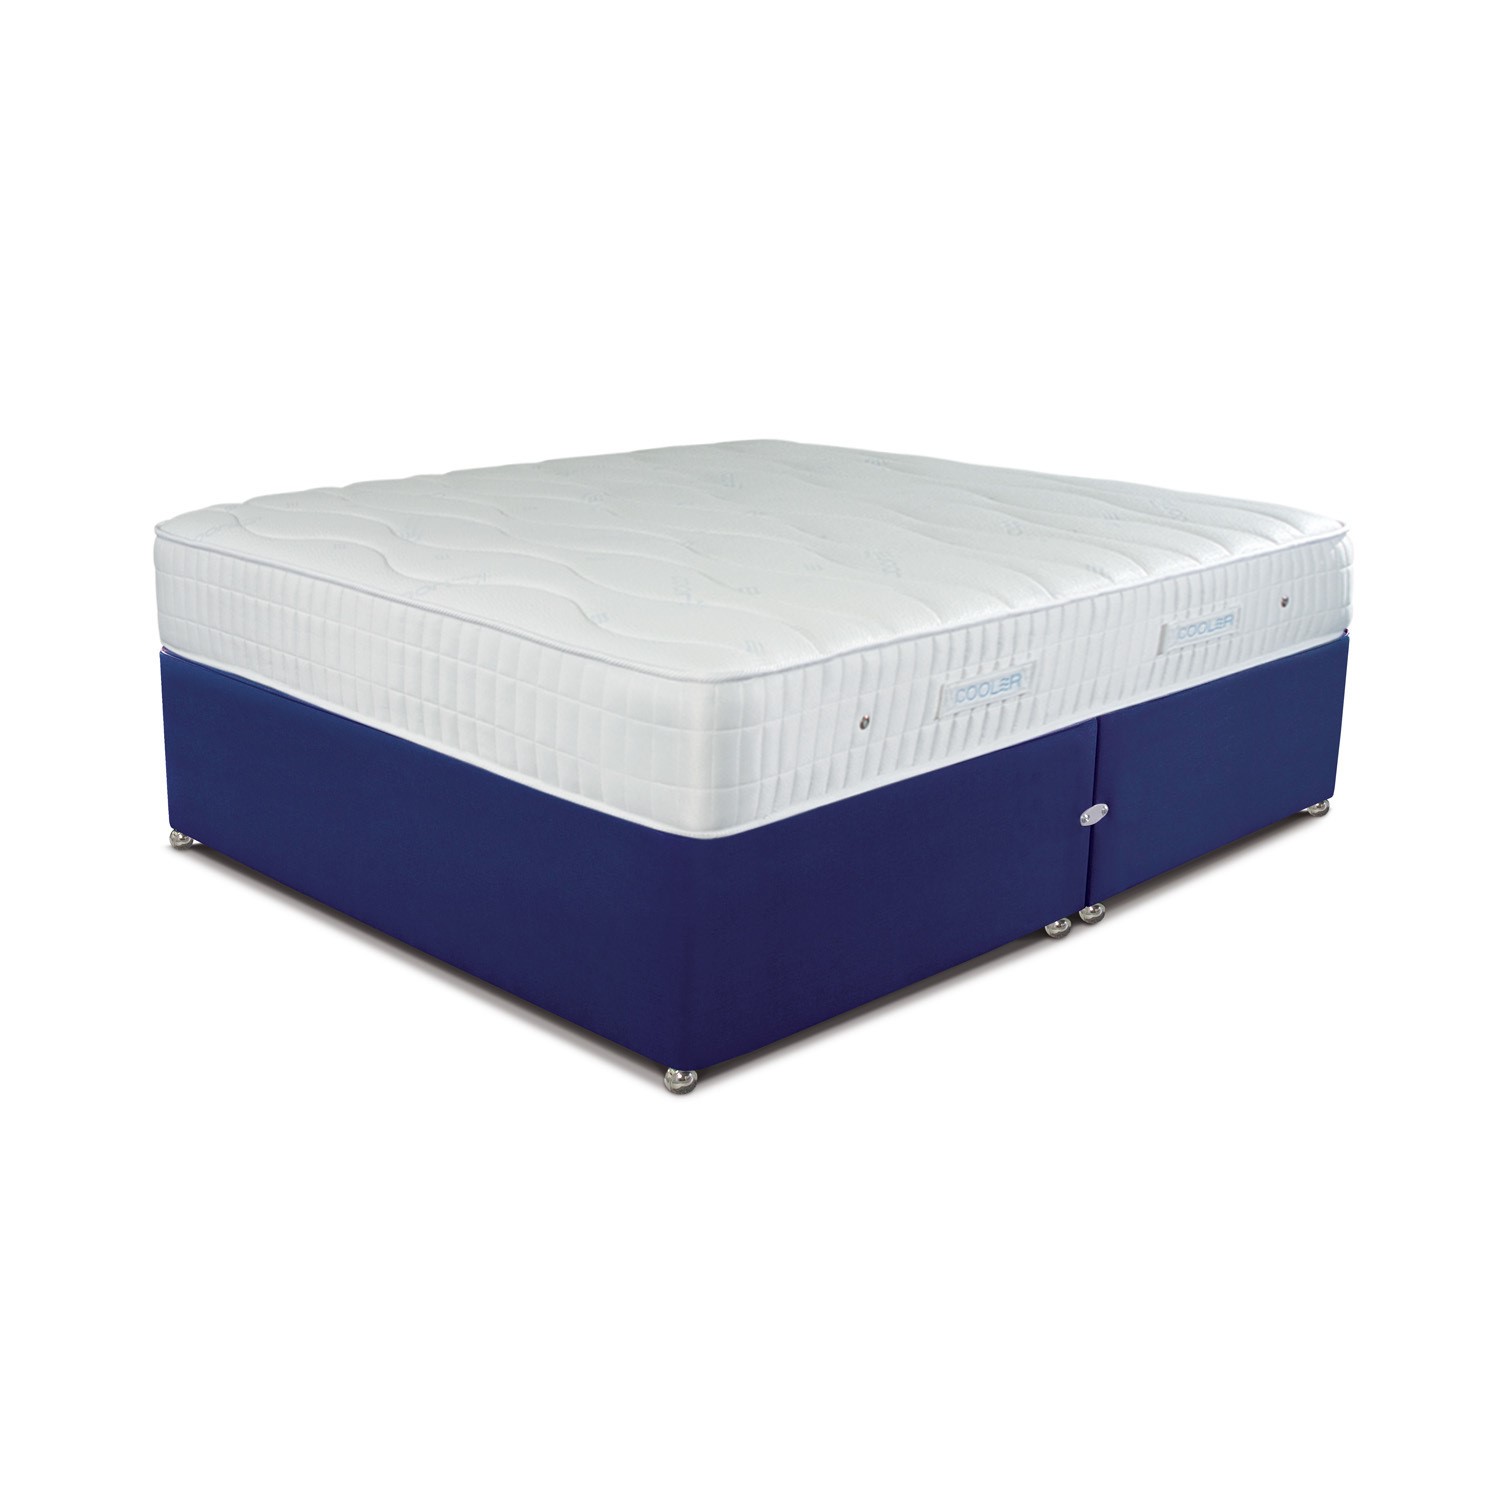 Photo of Sleepeezee double divan bed in plush navy with cooler pinnacle 1000 mattress